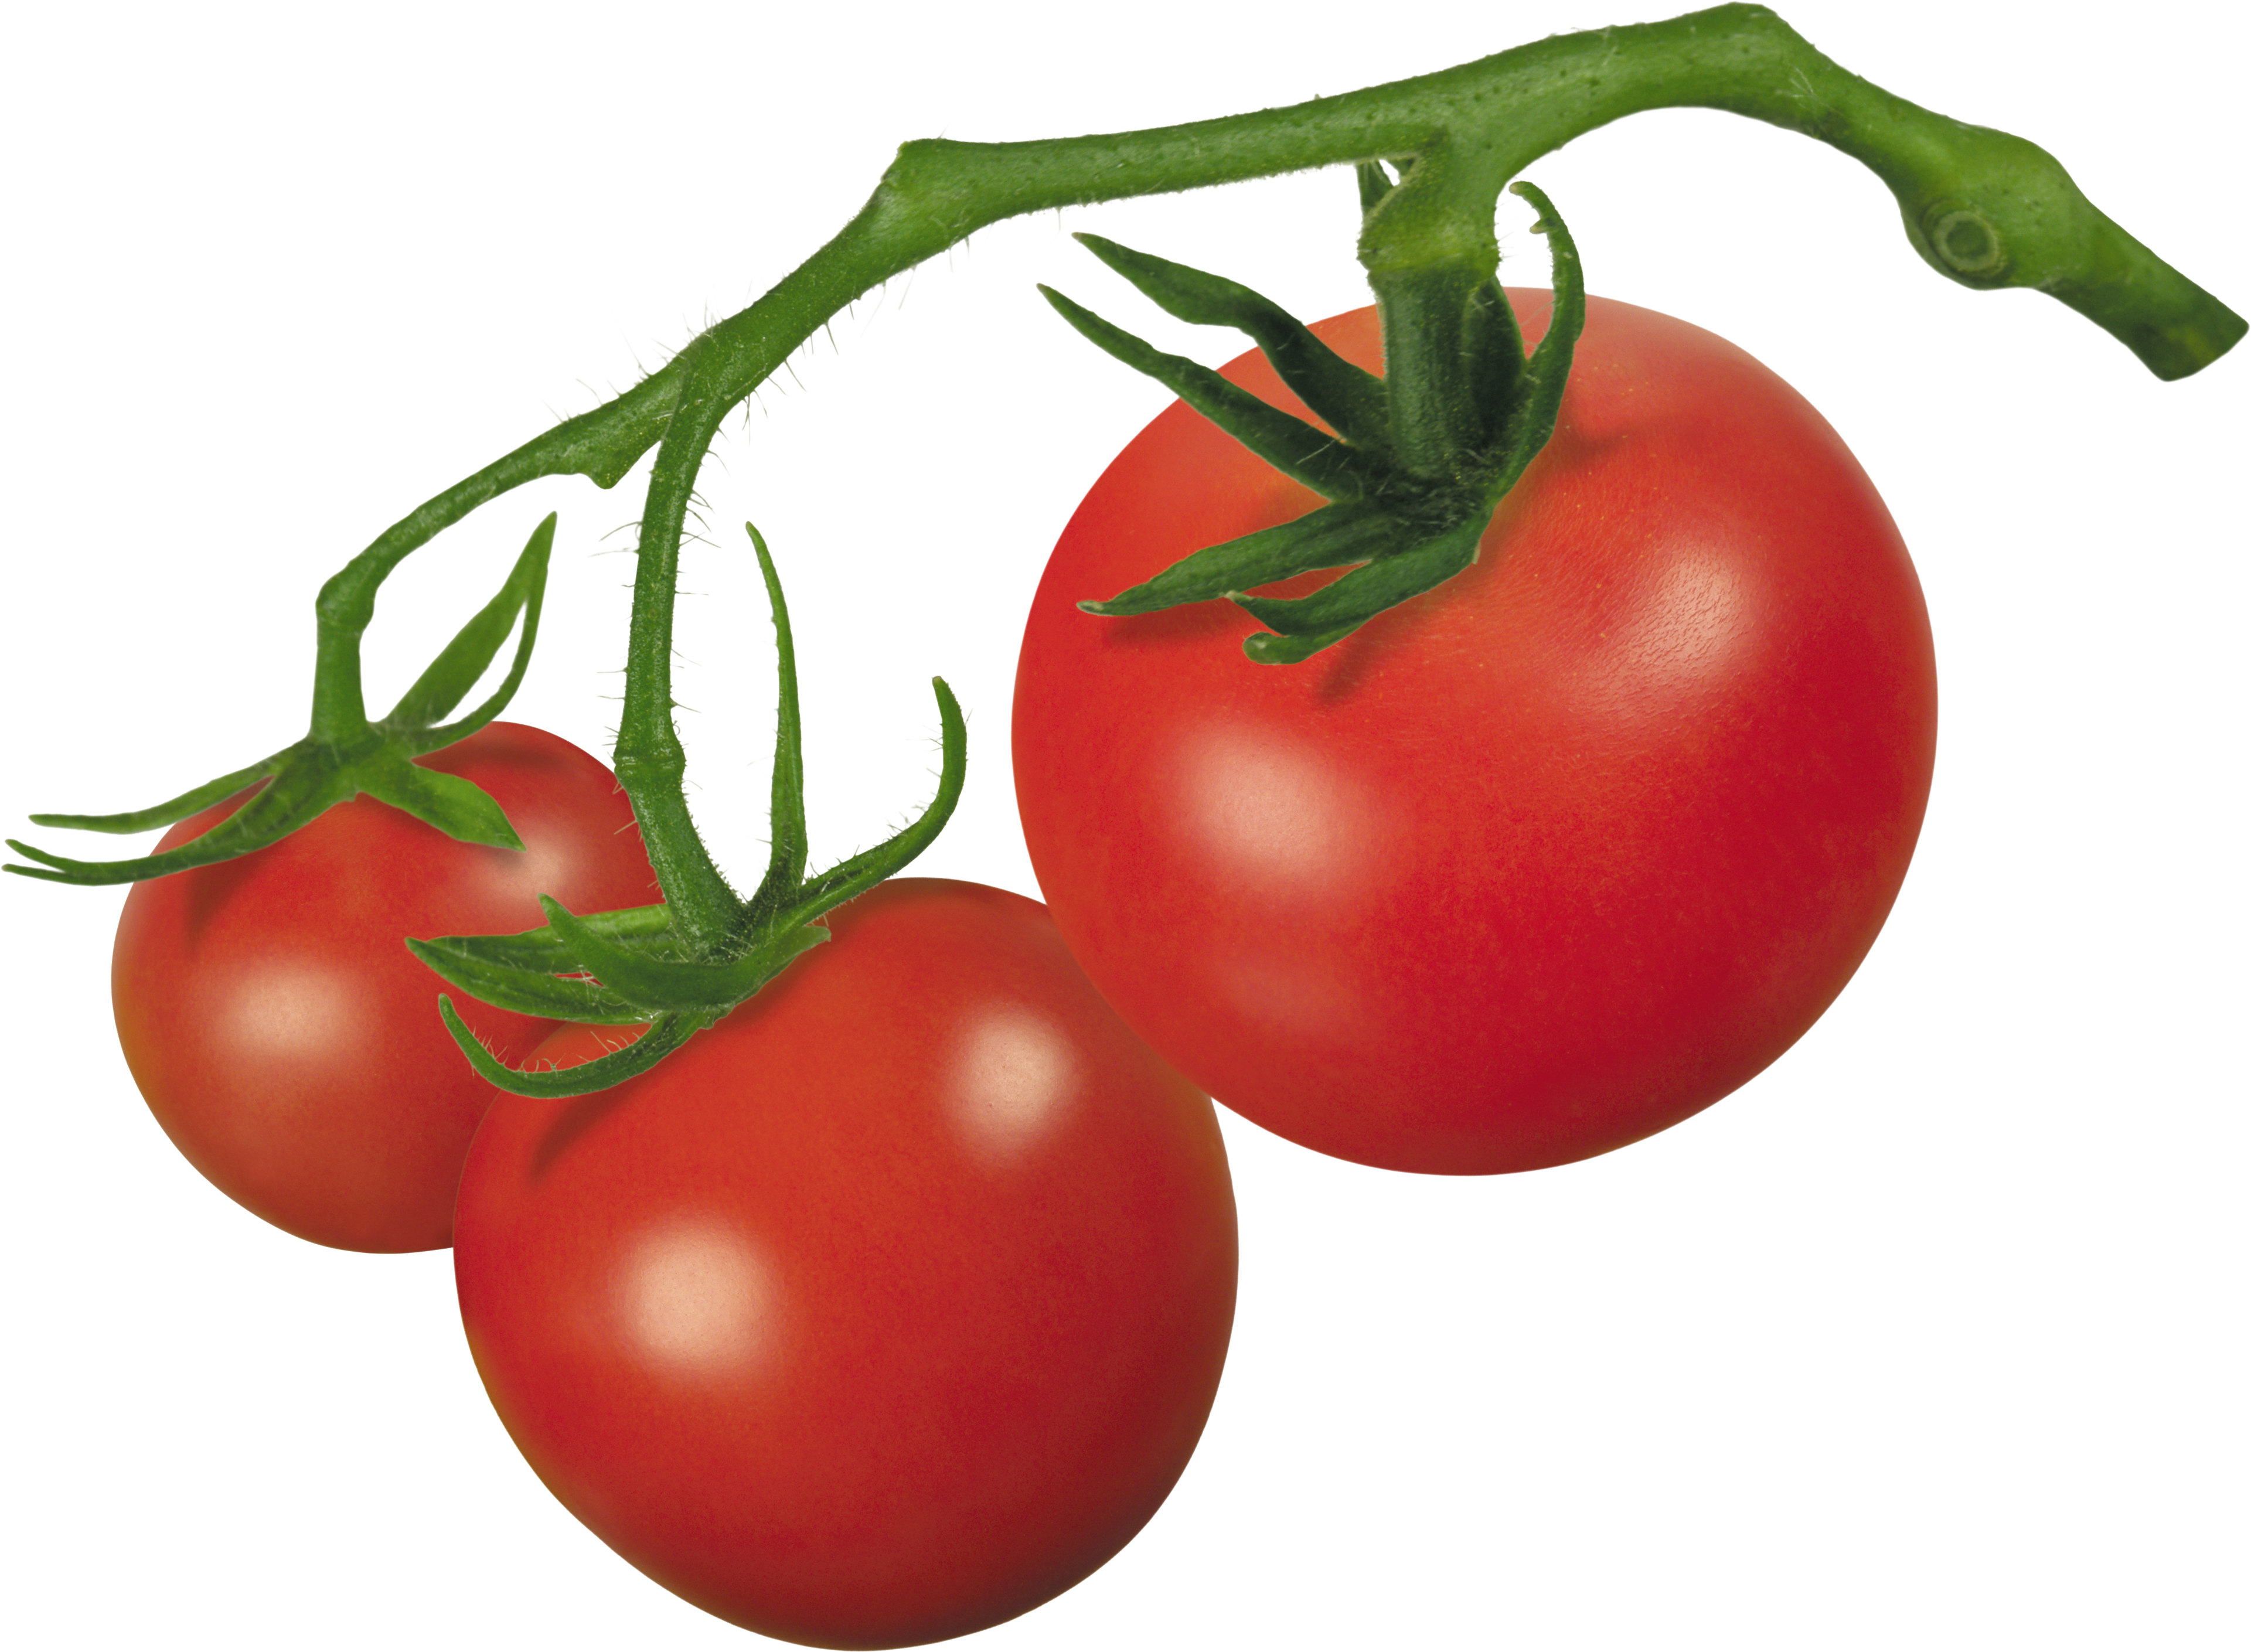 Tomato plant clipart no background 